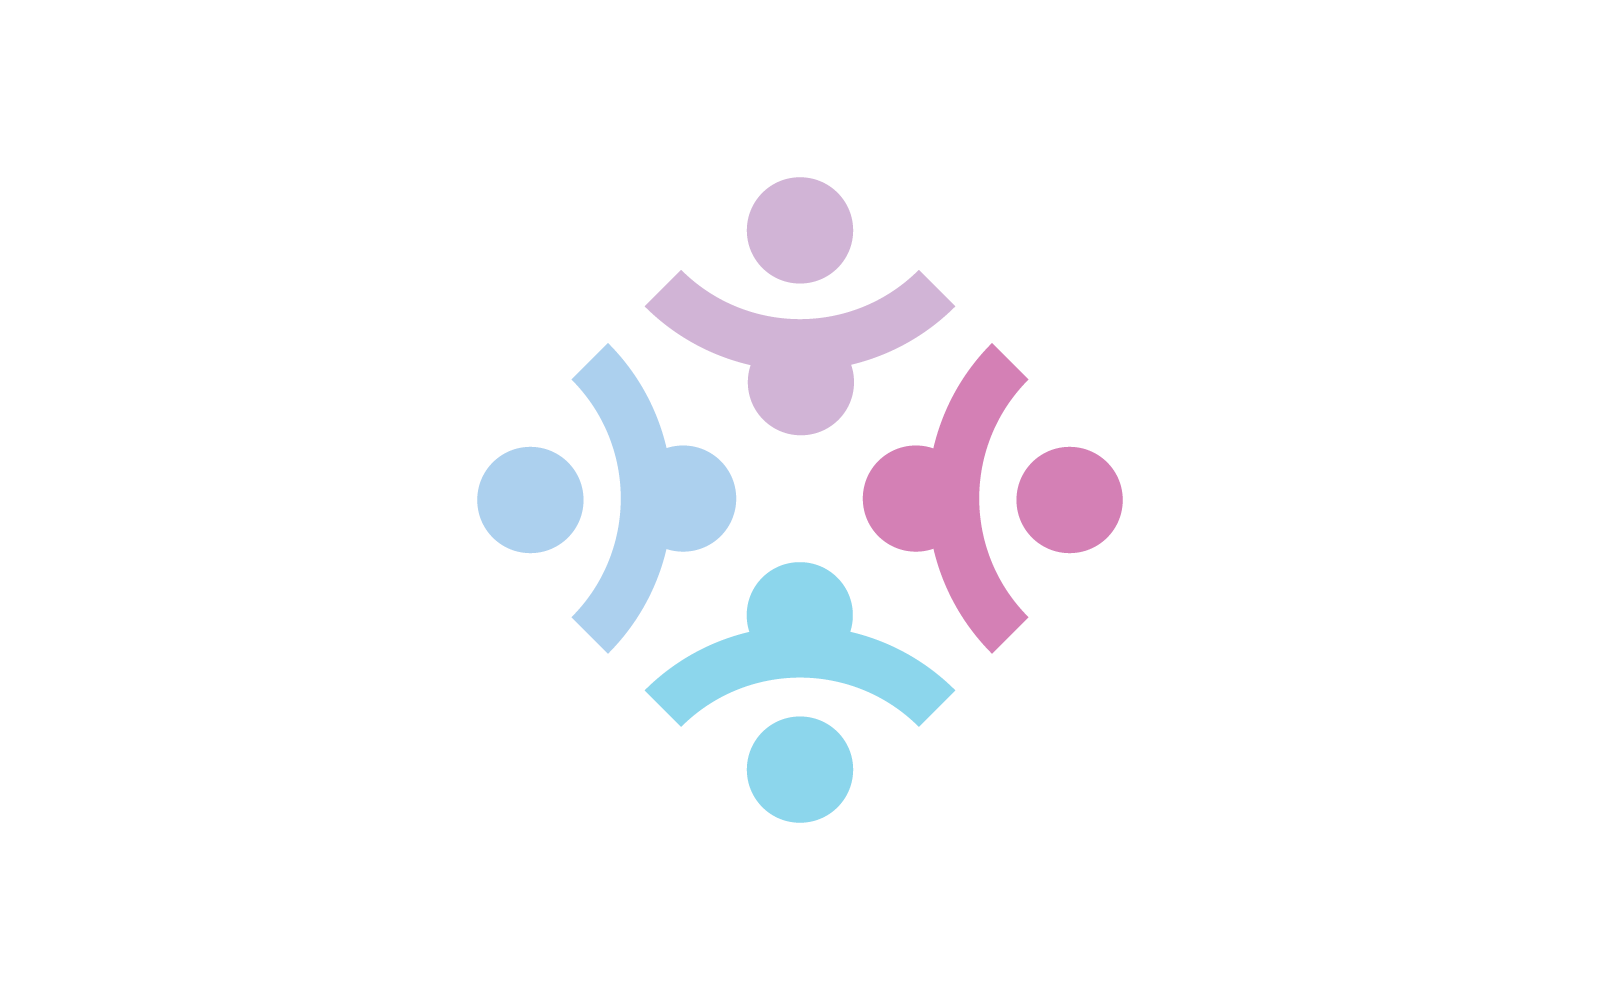 Community illustration vector logo design template